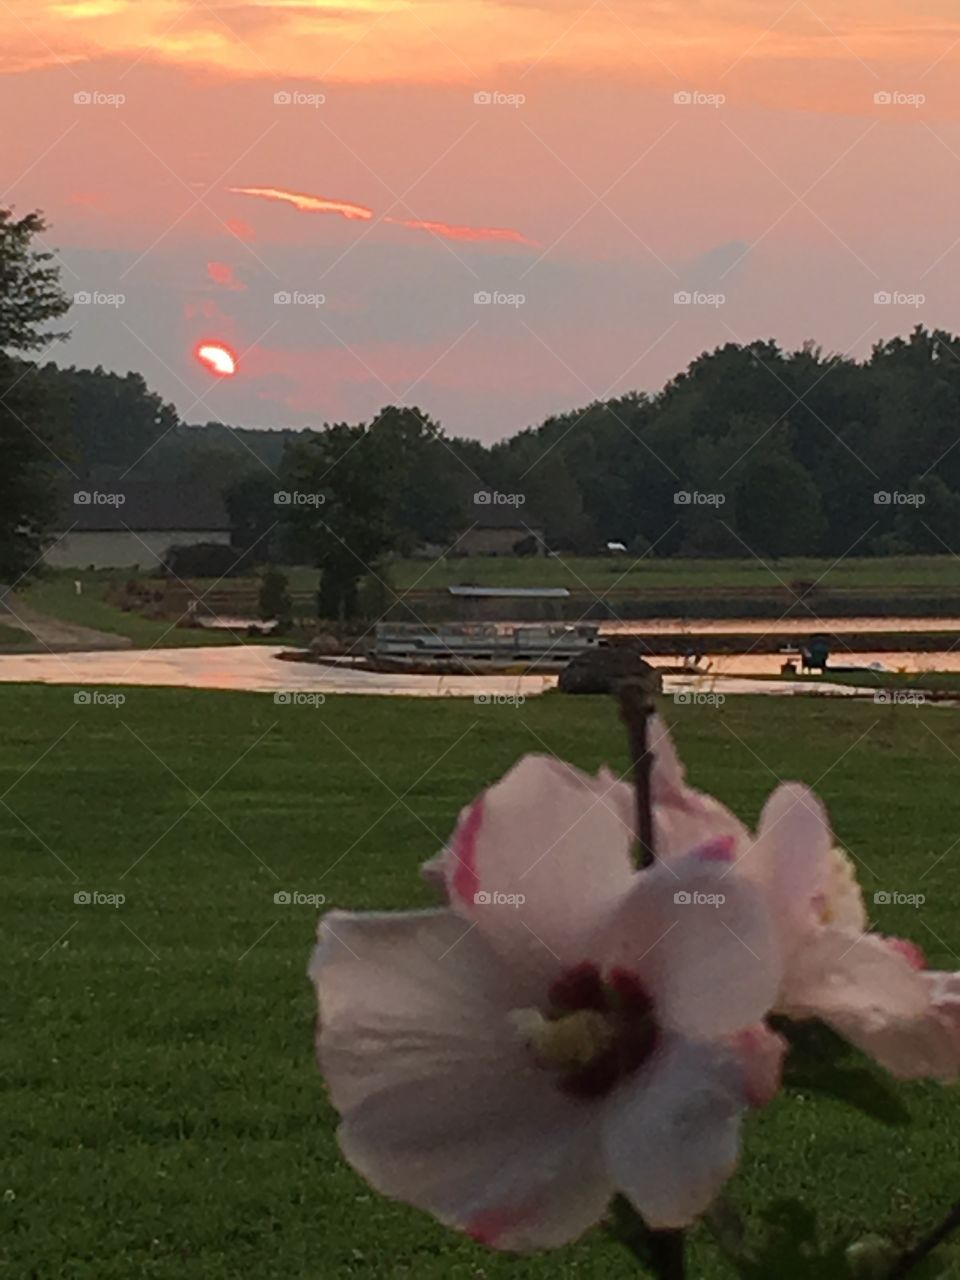 Sunset Rose of Sharon